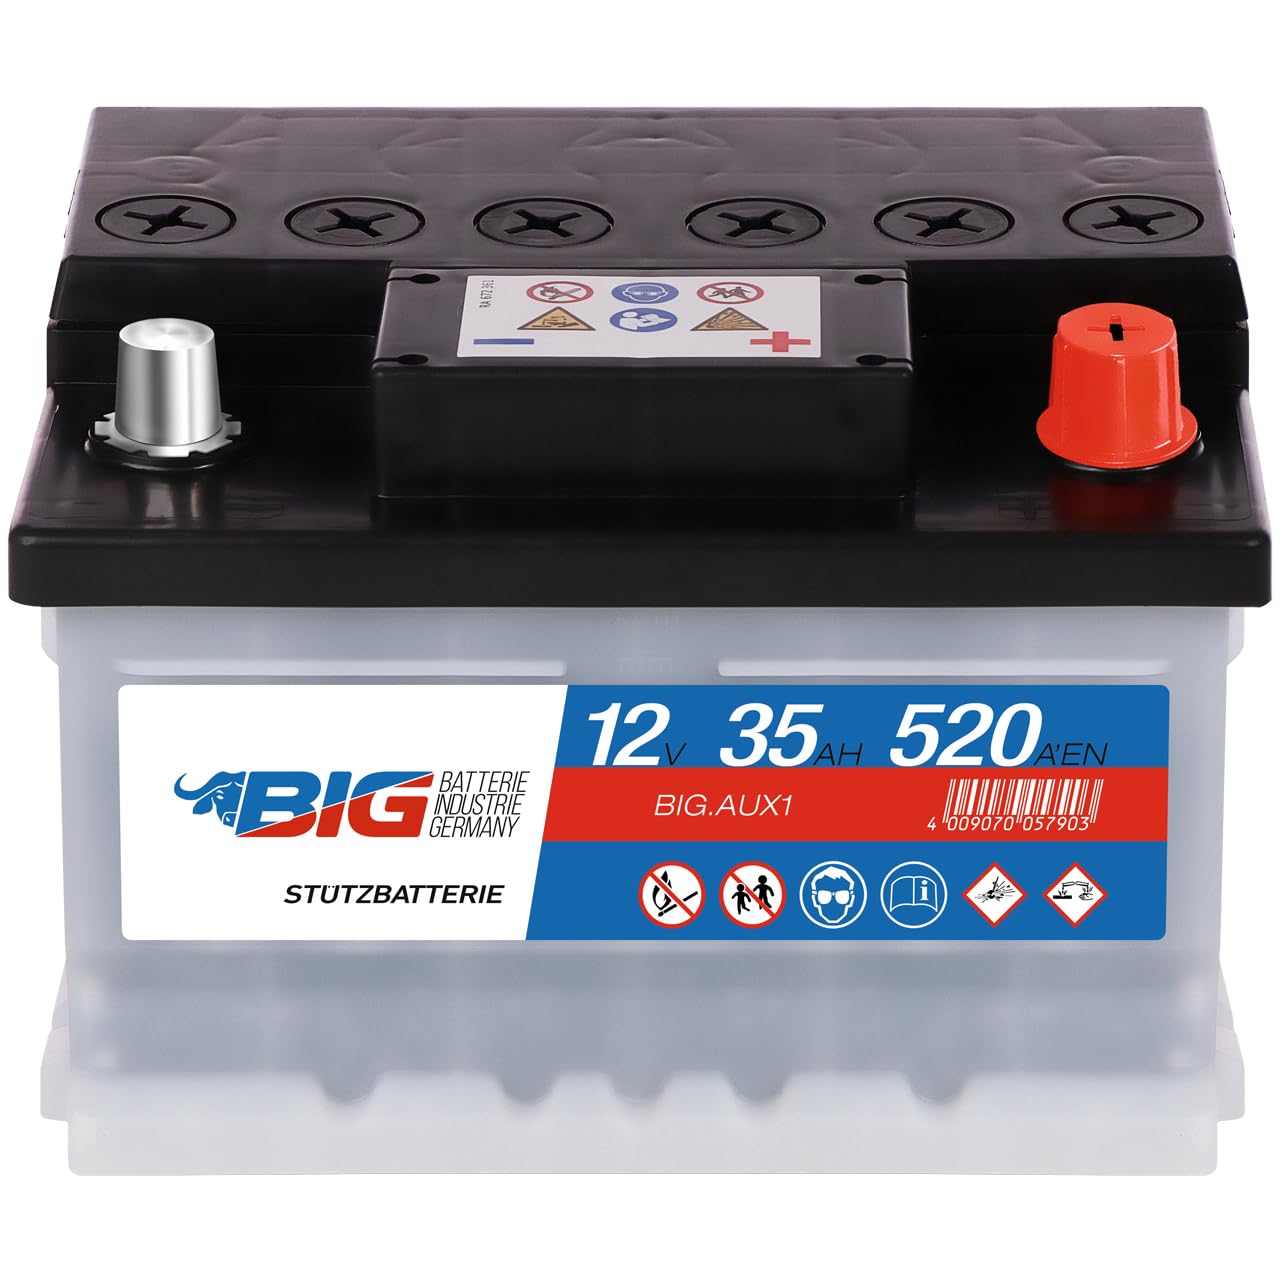 BIG AUX1 Stützbatterie 12V 35Ah 520A ersetzt A2305410001 SL R230 von BIG